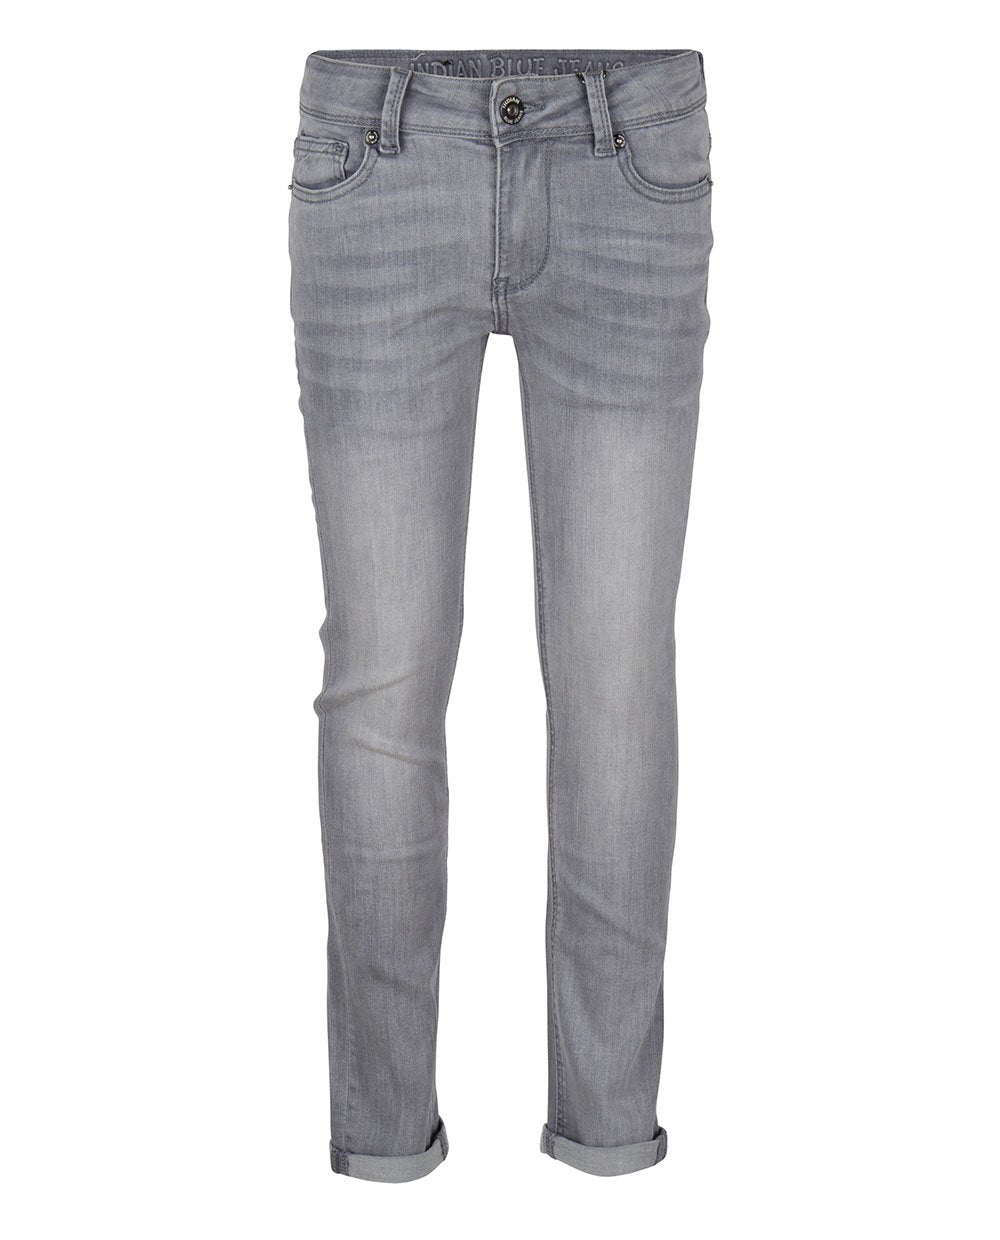 Jongens GREY RYAN SKINNY FIT NOOS van Indian Blue Jeans in de kleur Grey Denim in maat 176.